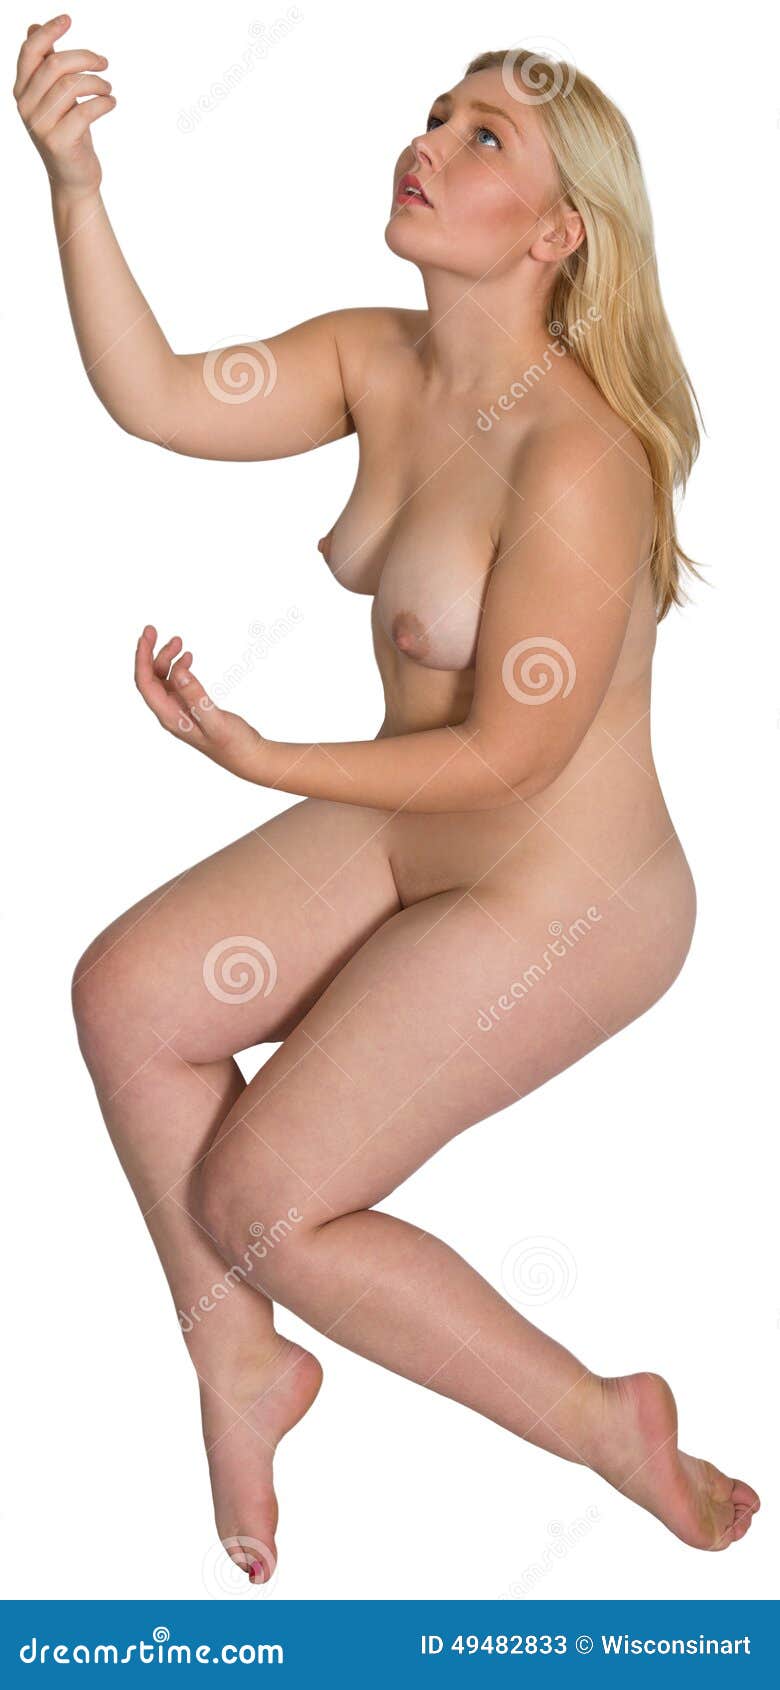 virgin ass girl farting nude